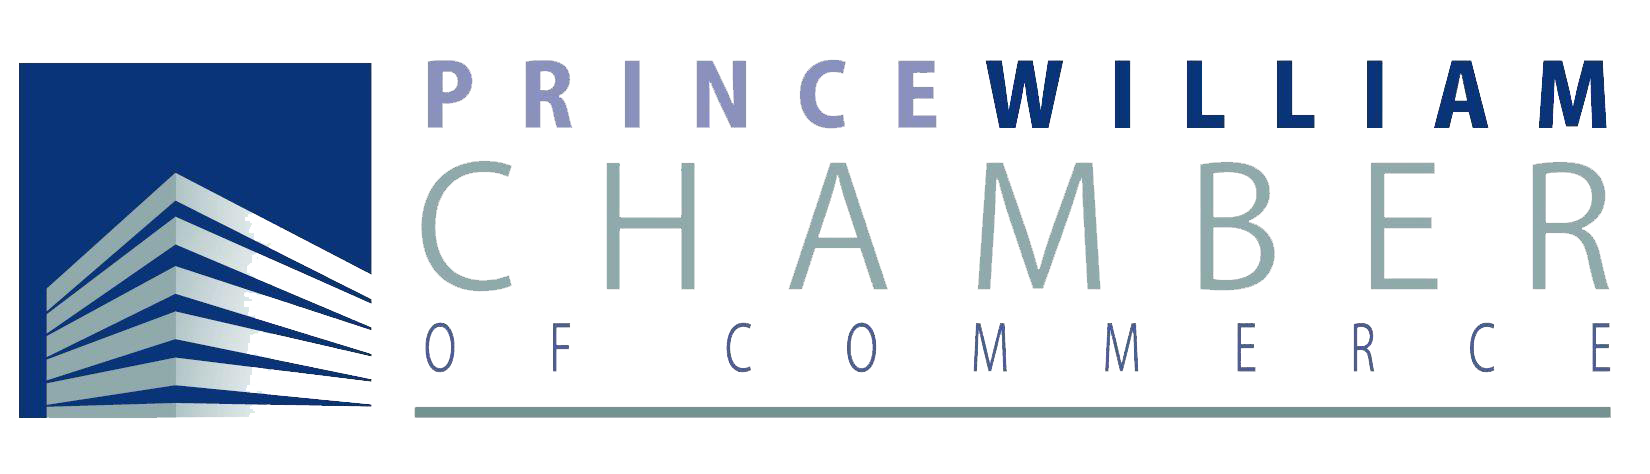 Prince William Chamber Logo